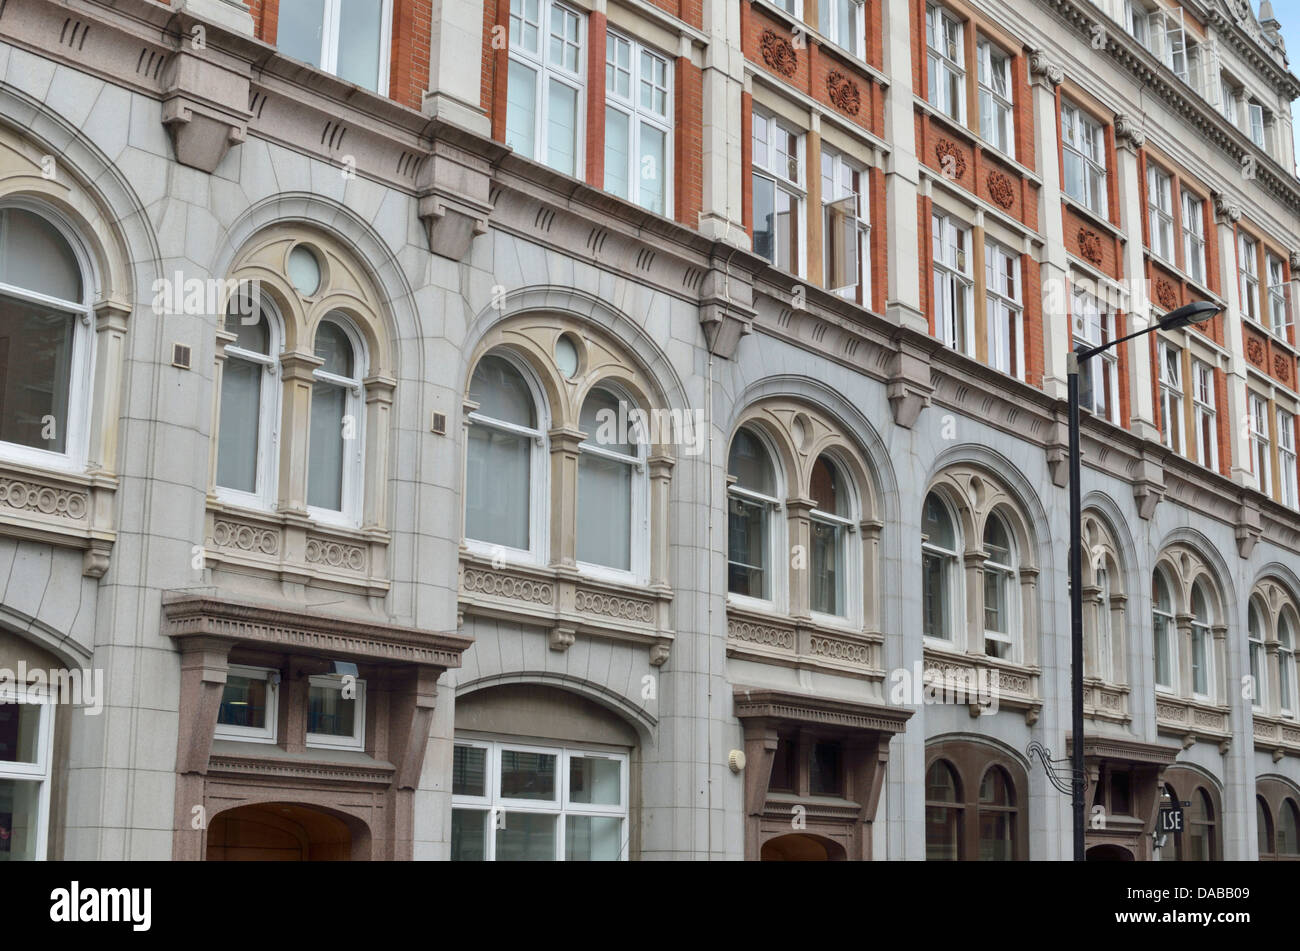 London School of Economics (LSE) Grosvenor House, Theatre Royal Drury Lane, Covent Garden, London, UK. Stockfoto